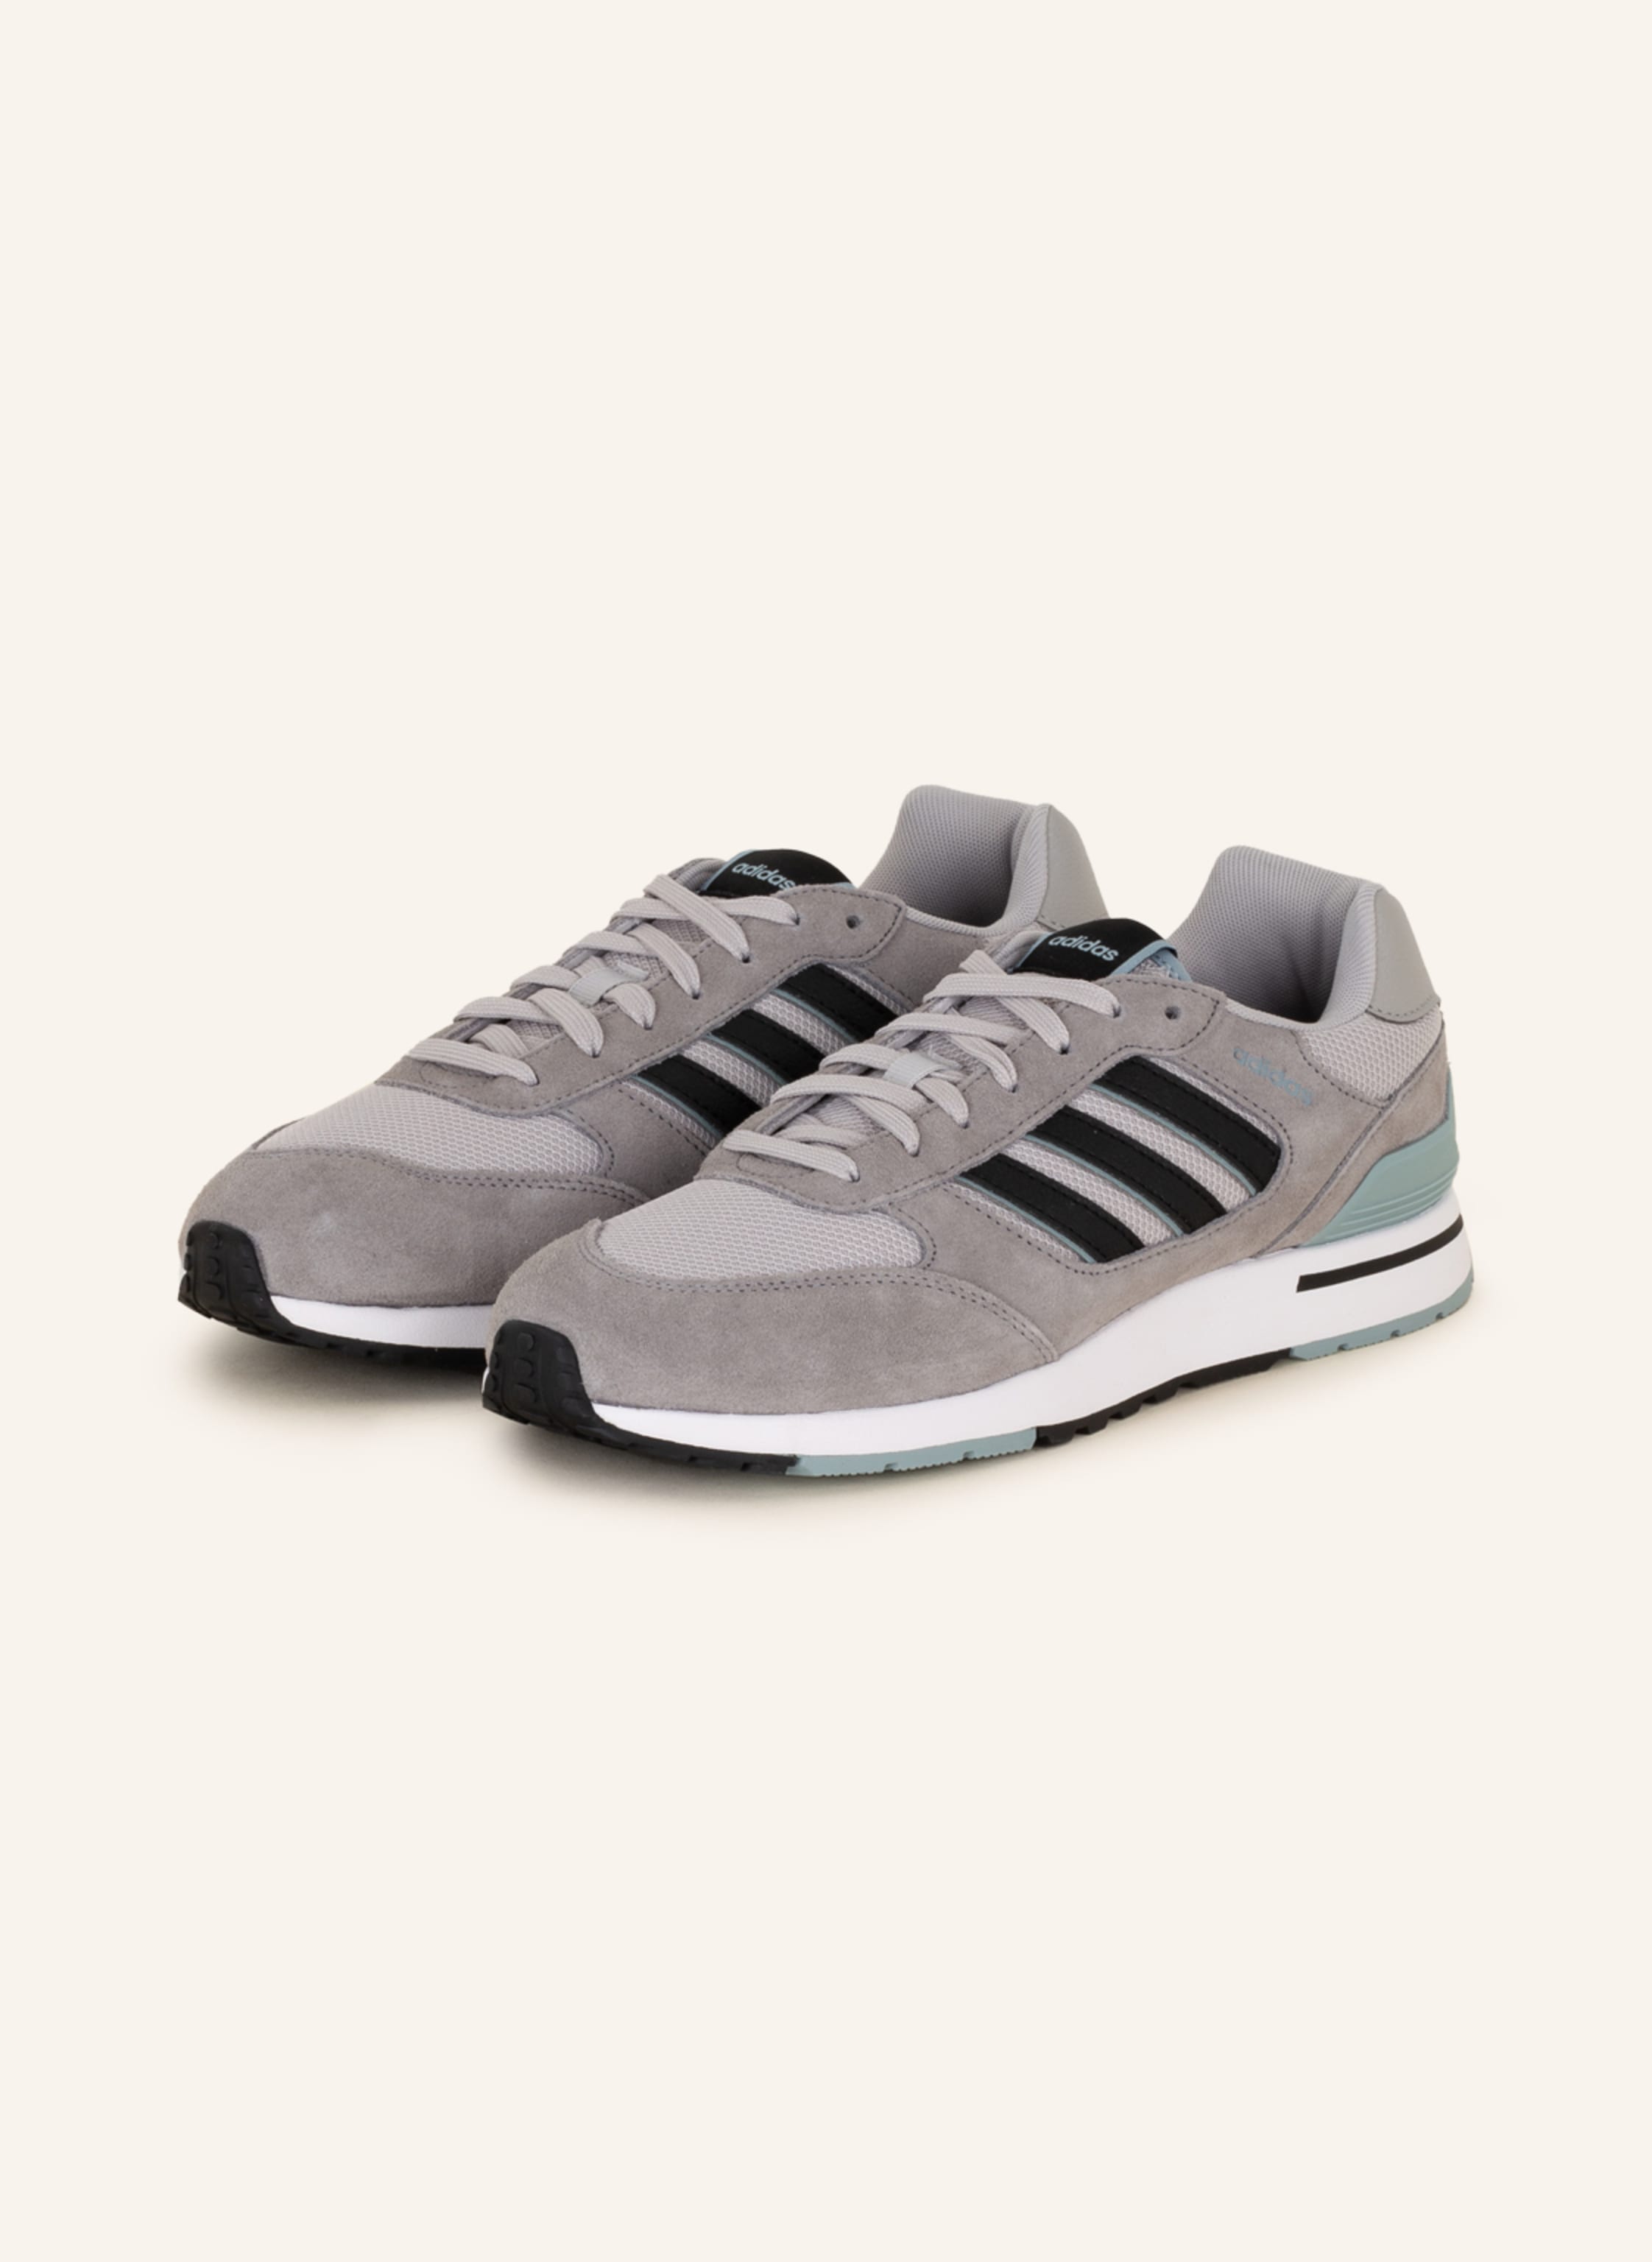 Sneakers RUN 80S in black/ blue gray | Breuninger